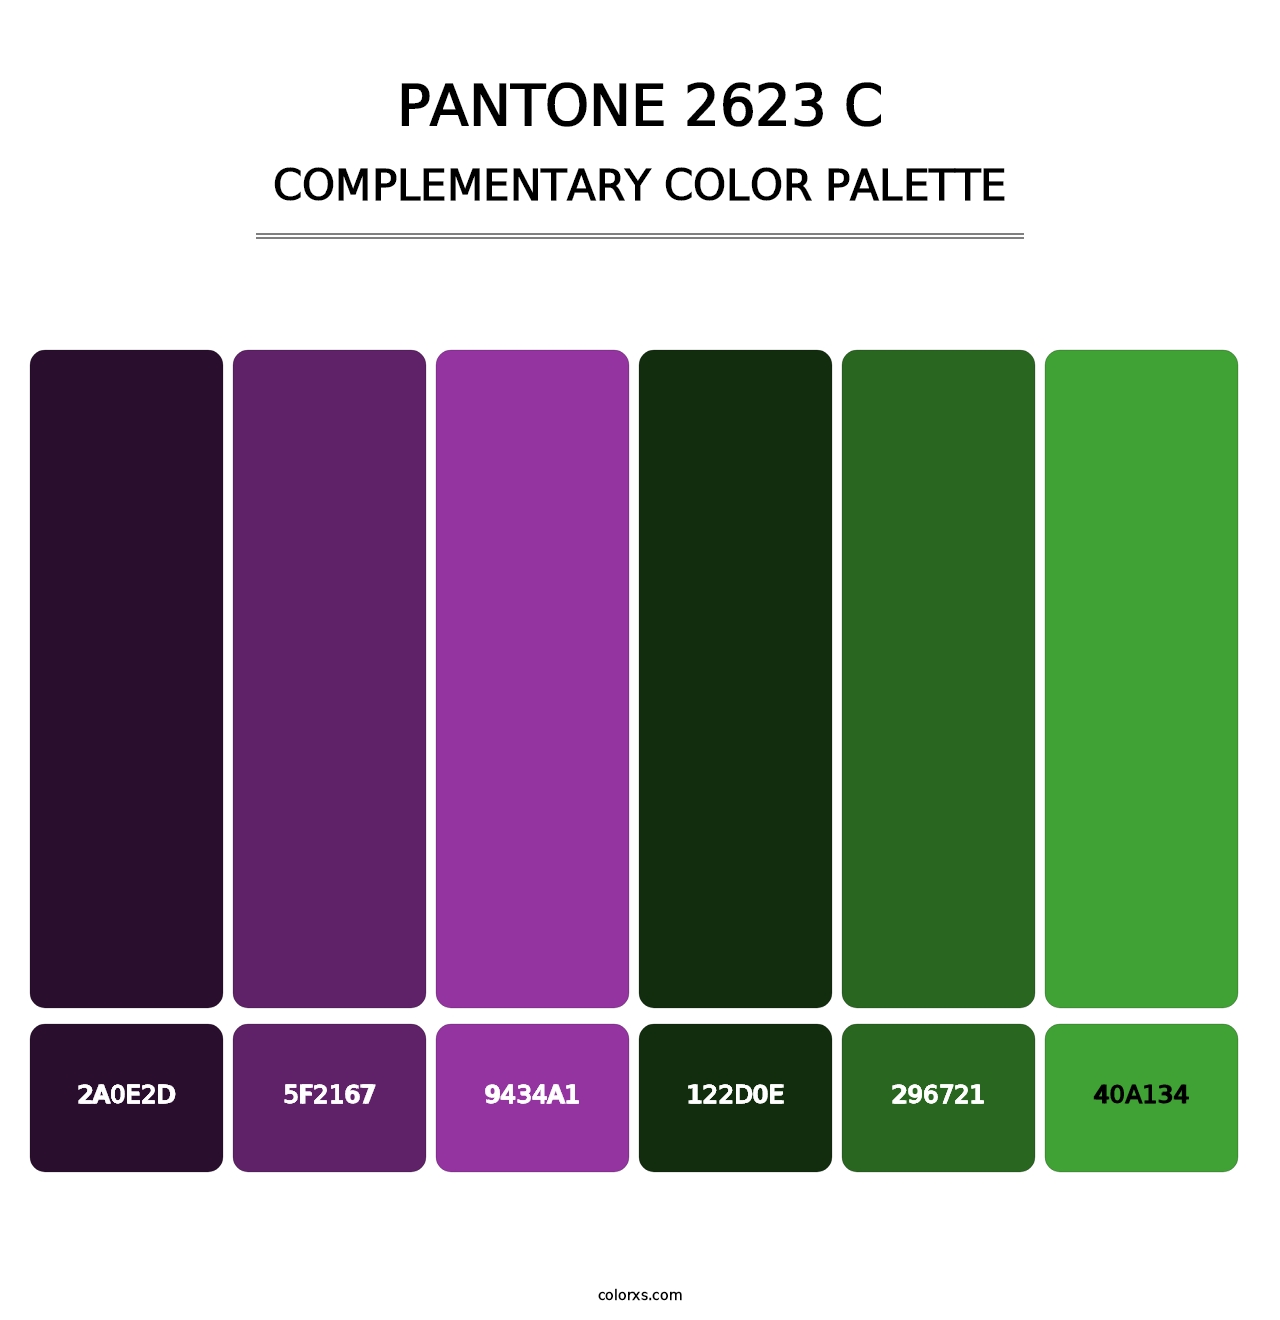 PANTONE 2623 C - Complementary Color Palette